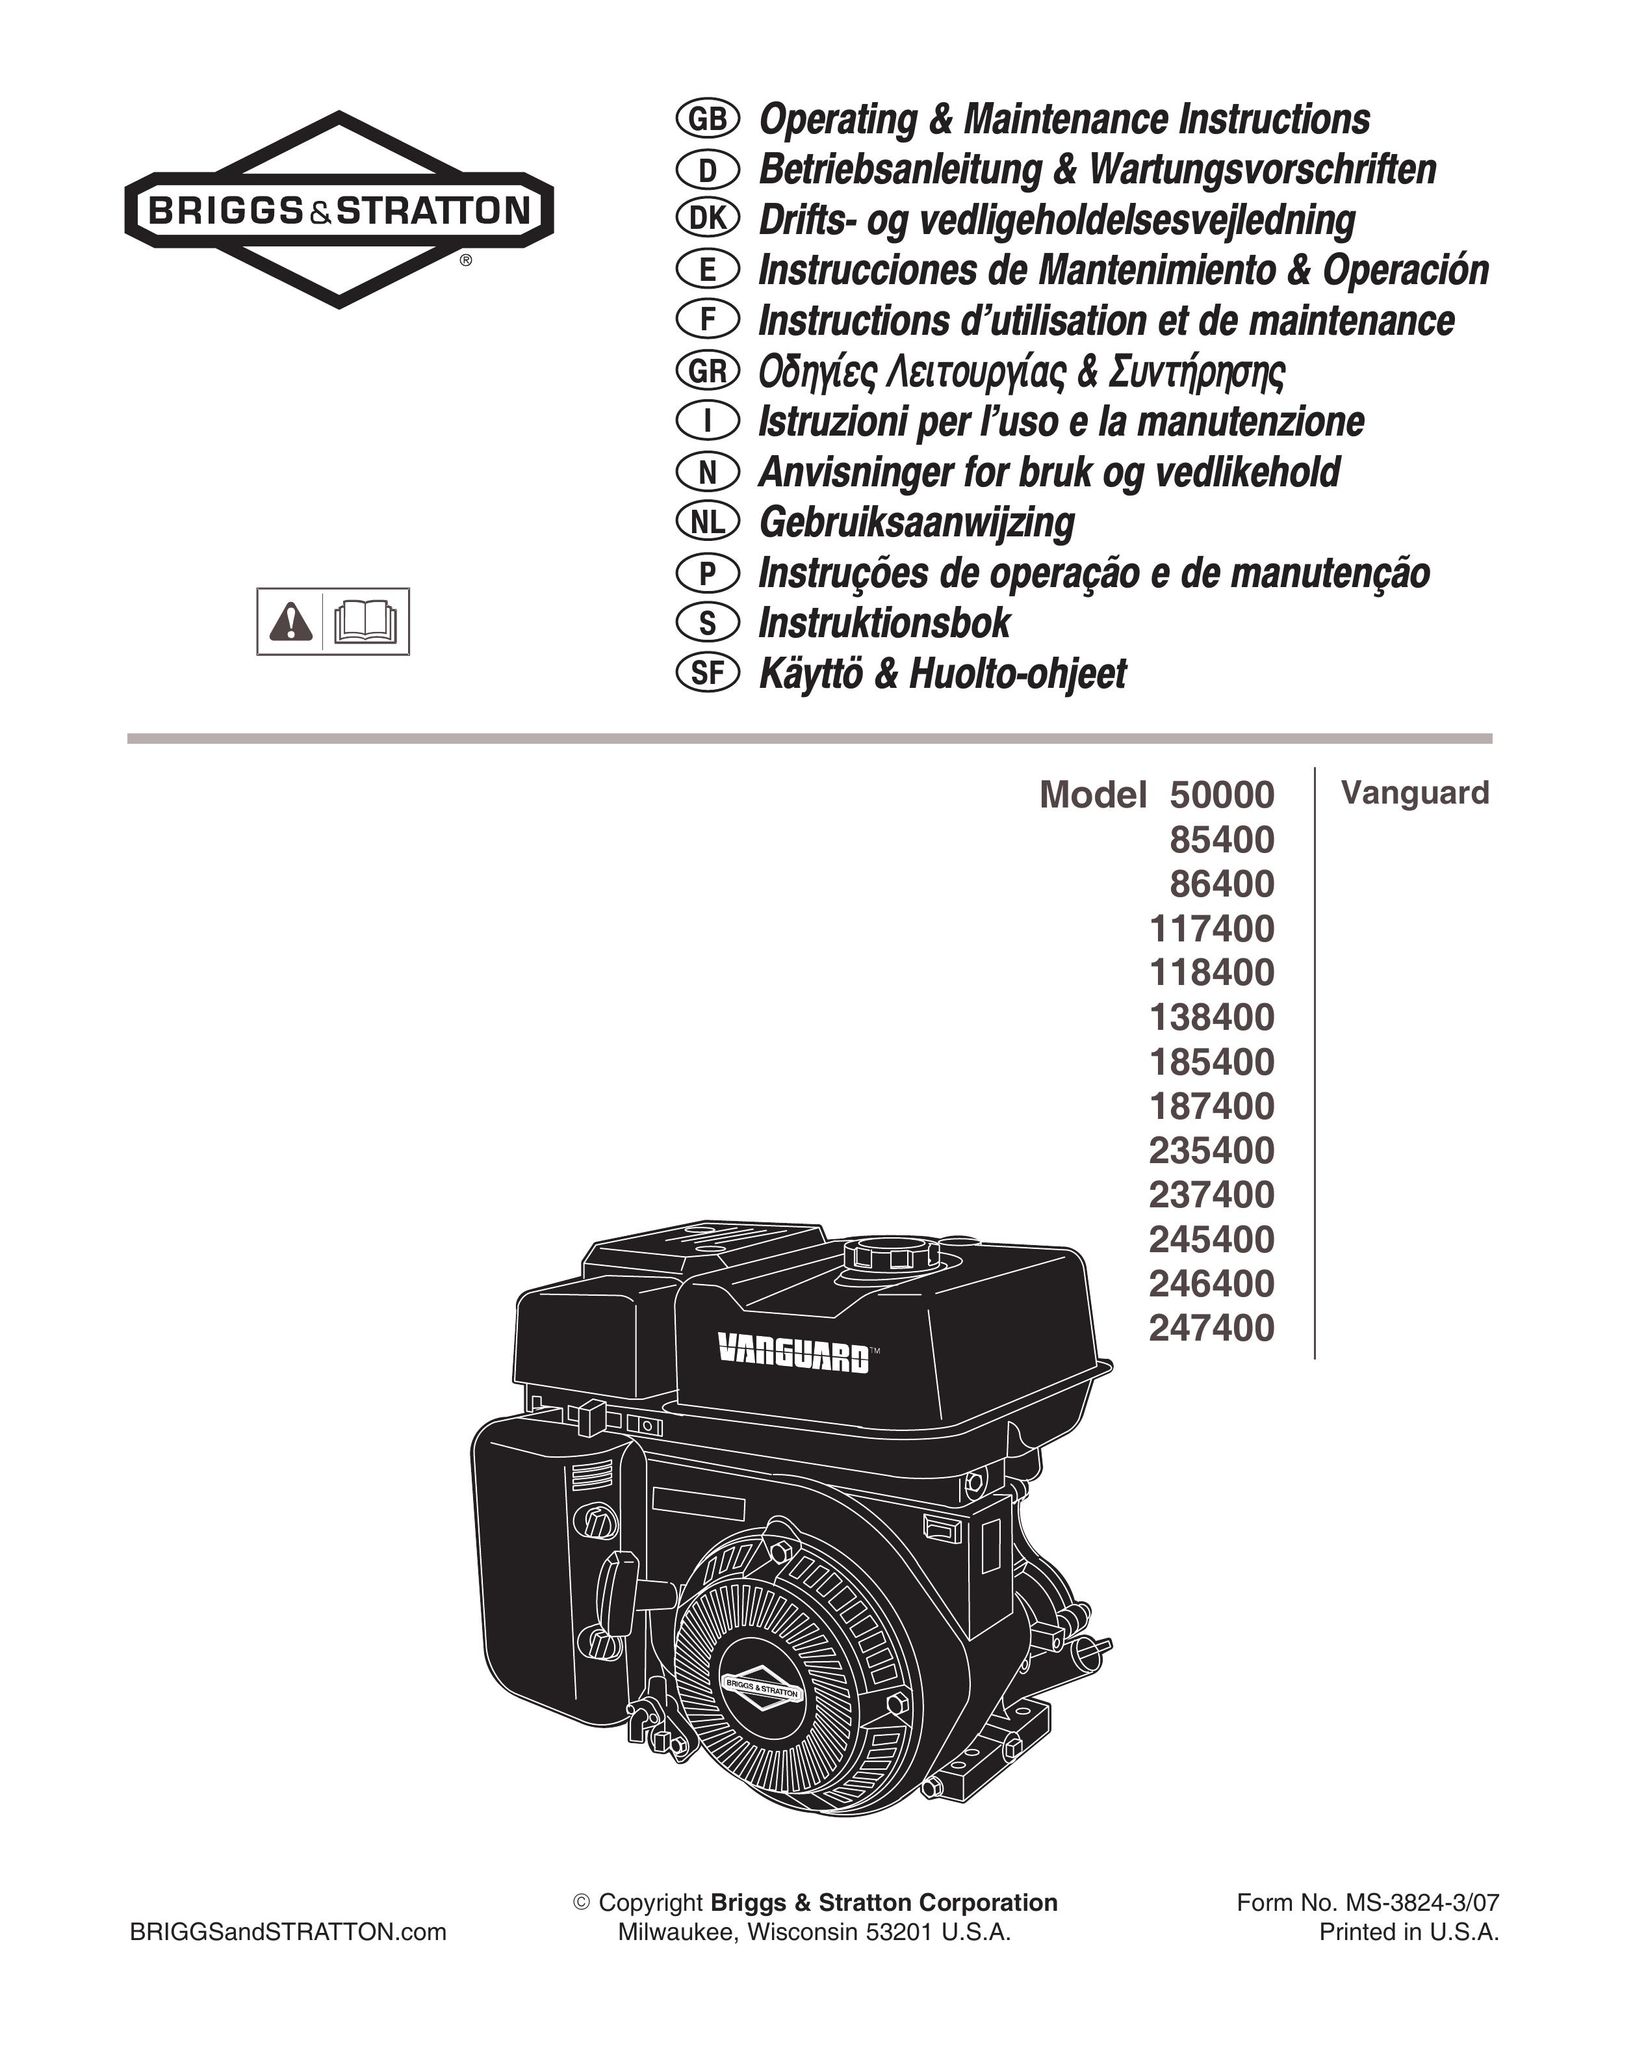 Briggs & Stratton 117400 Plumbing Product User Manual